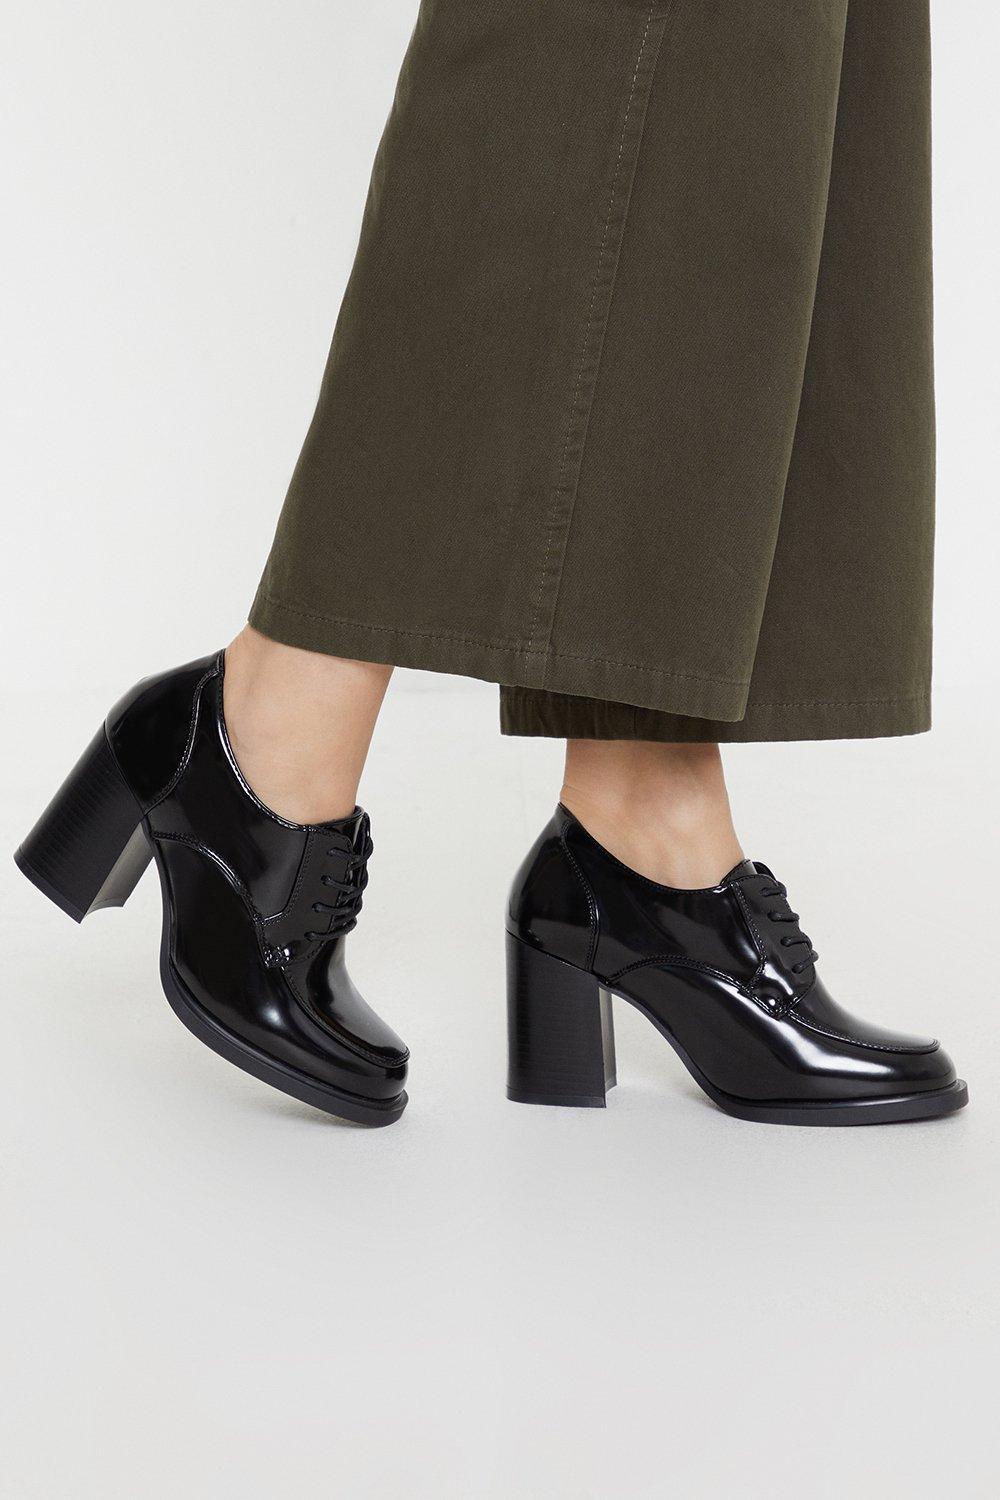 Women’s Principles: Lara Front Lace Up High Block Heel Shoe - true black - 8